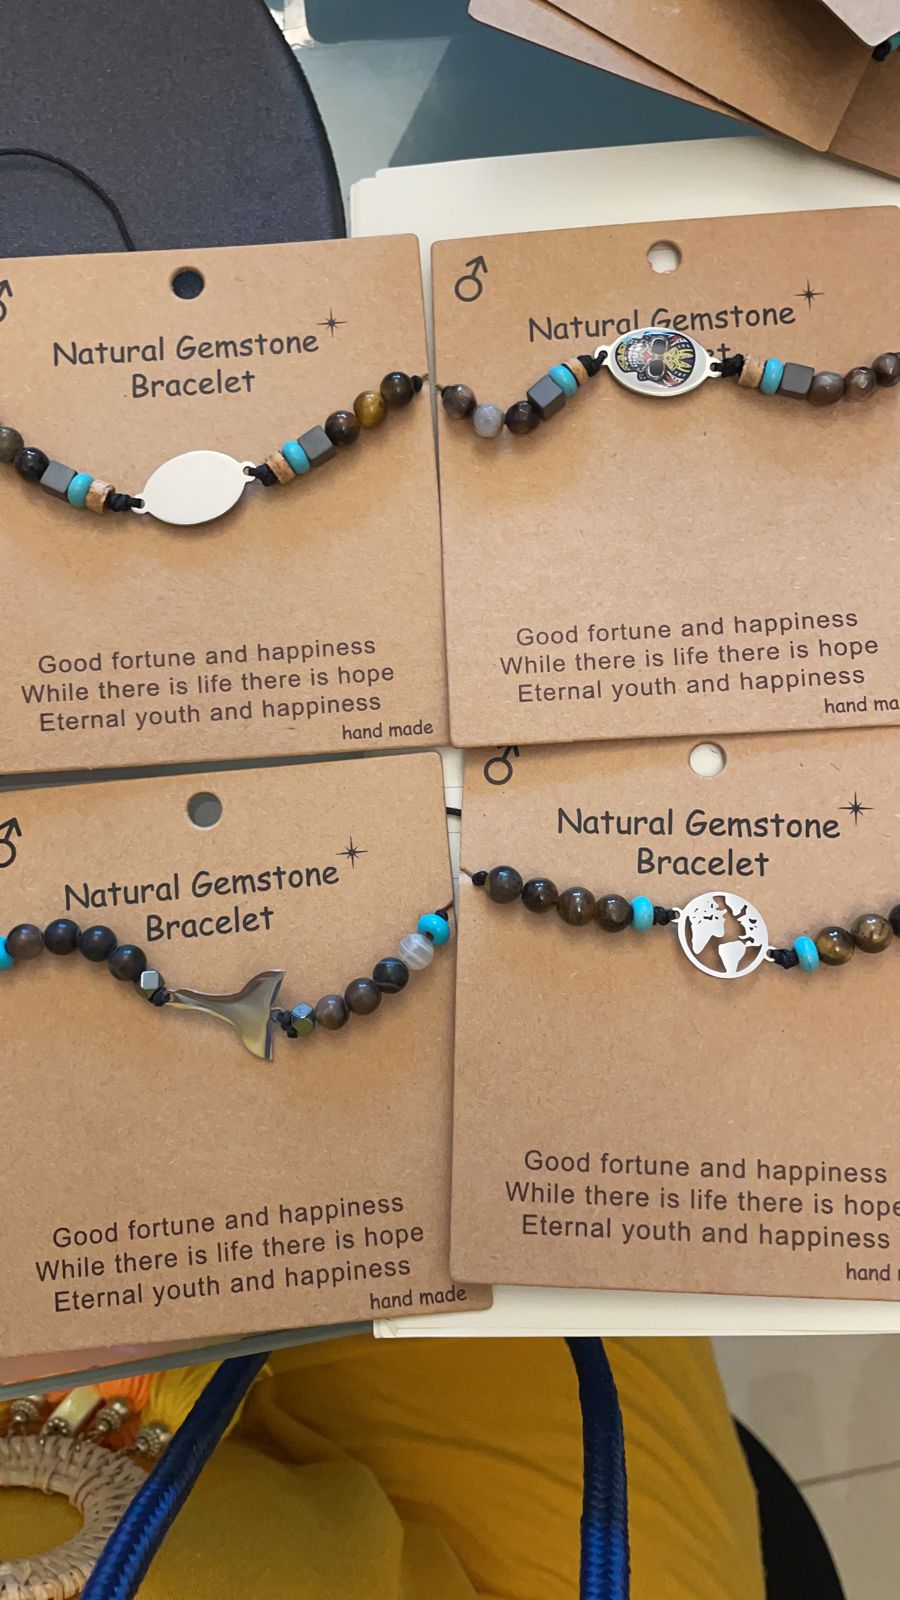 Natural Gemstone Bracelet - مجوهرات